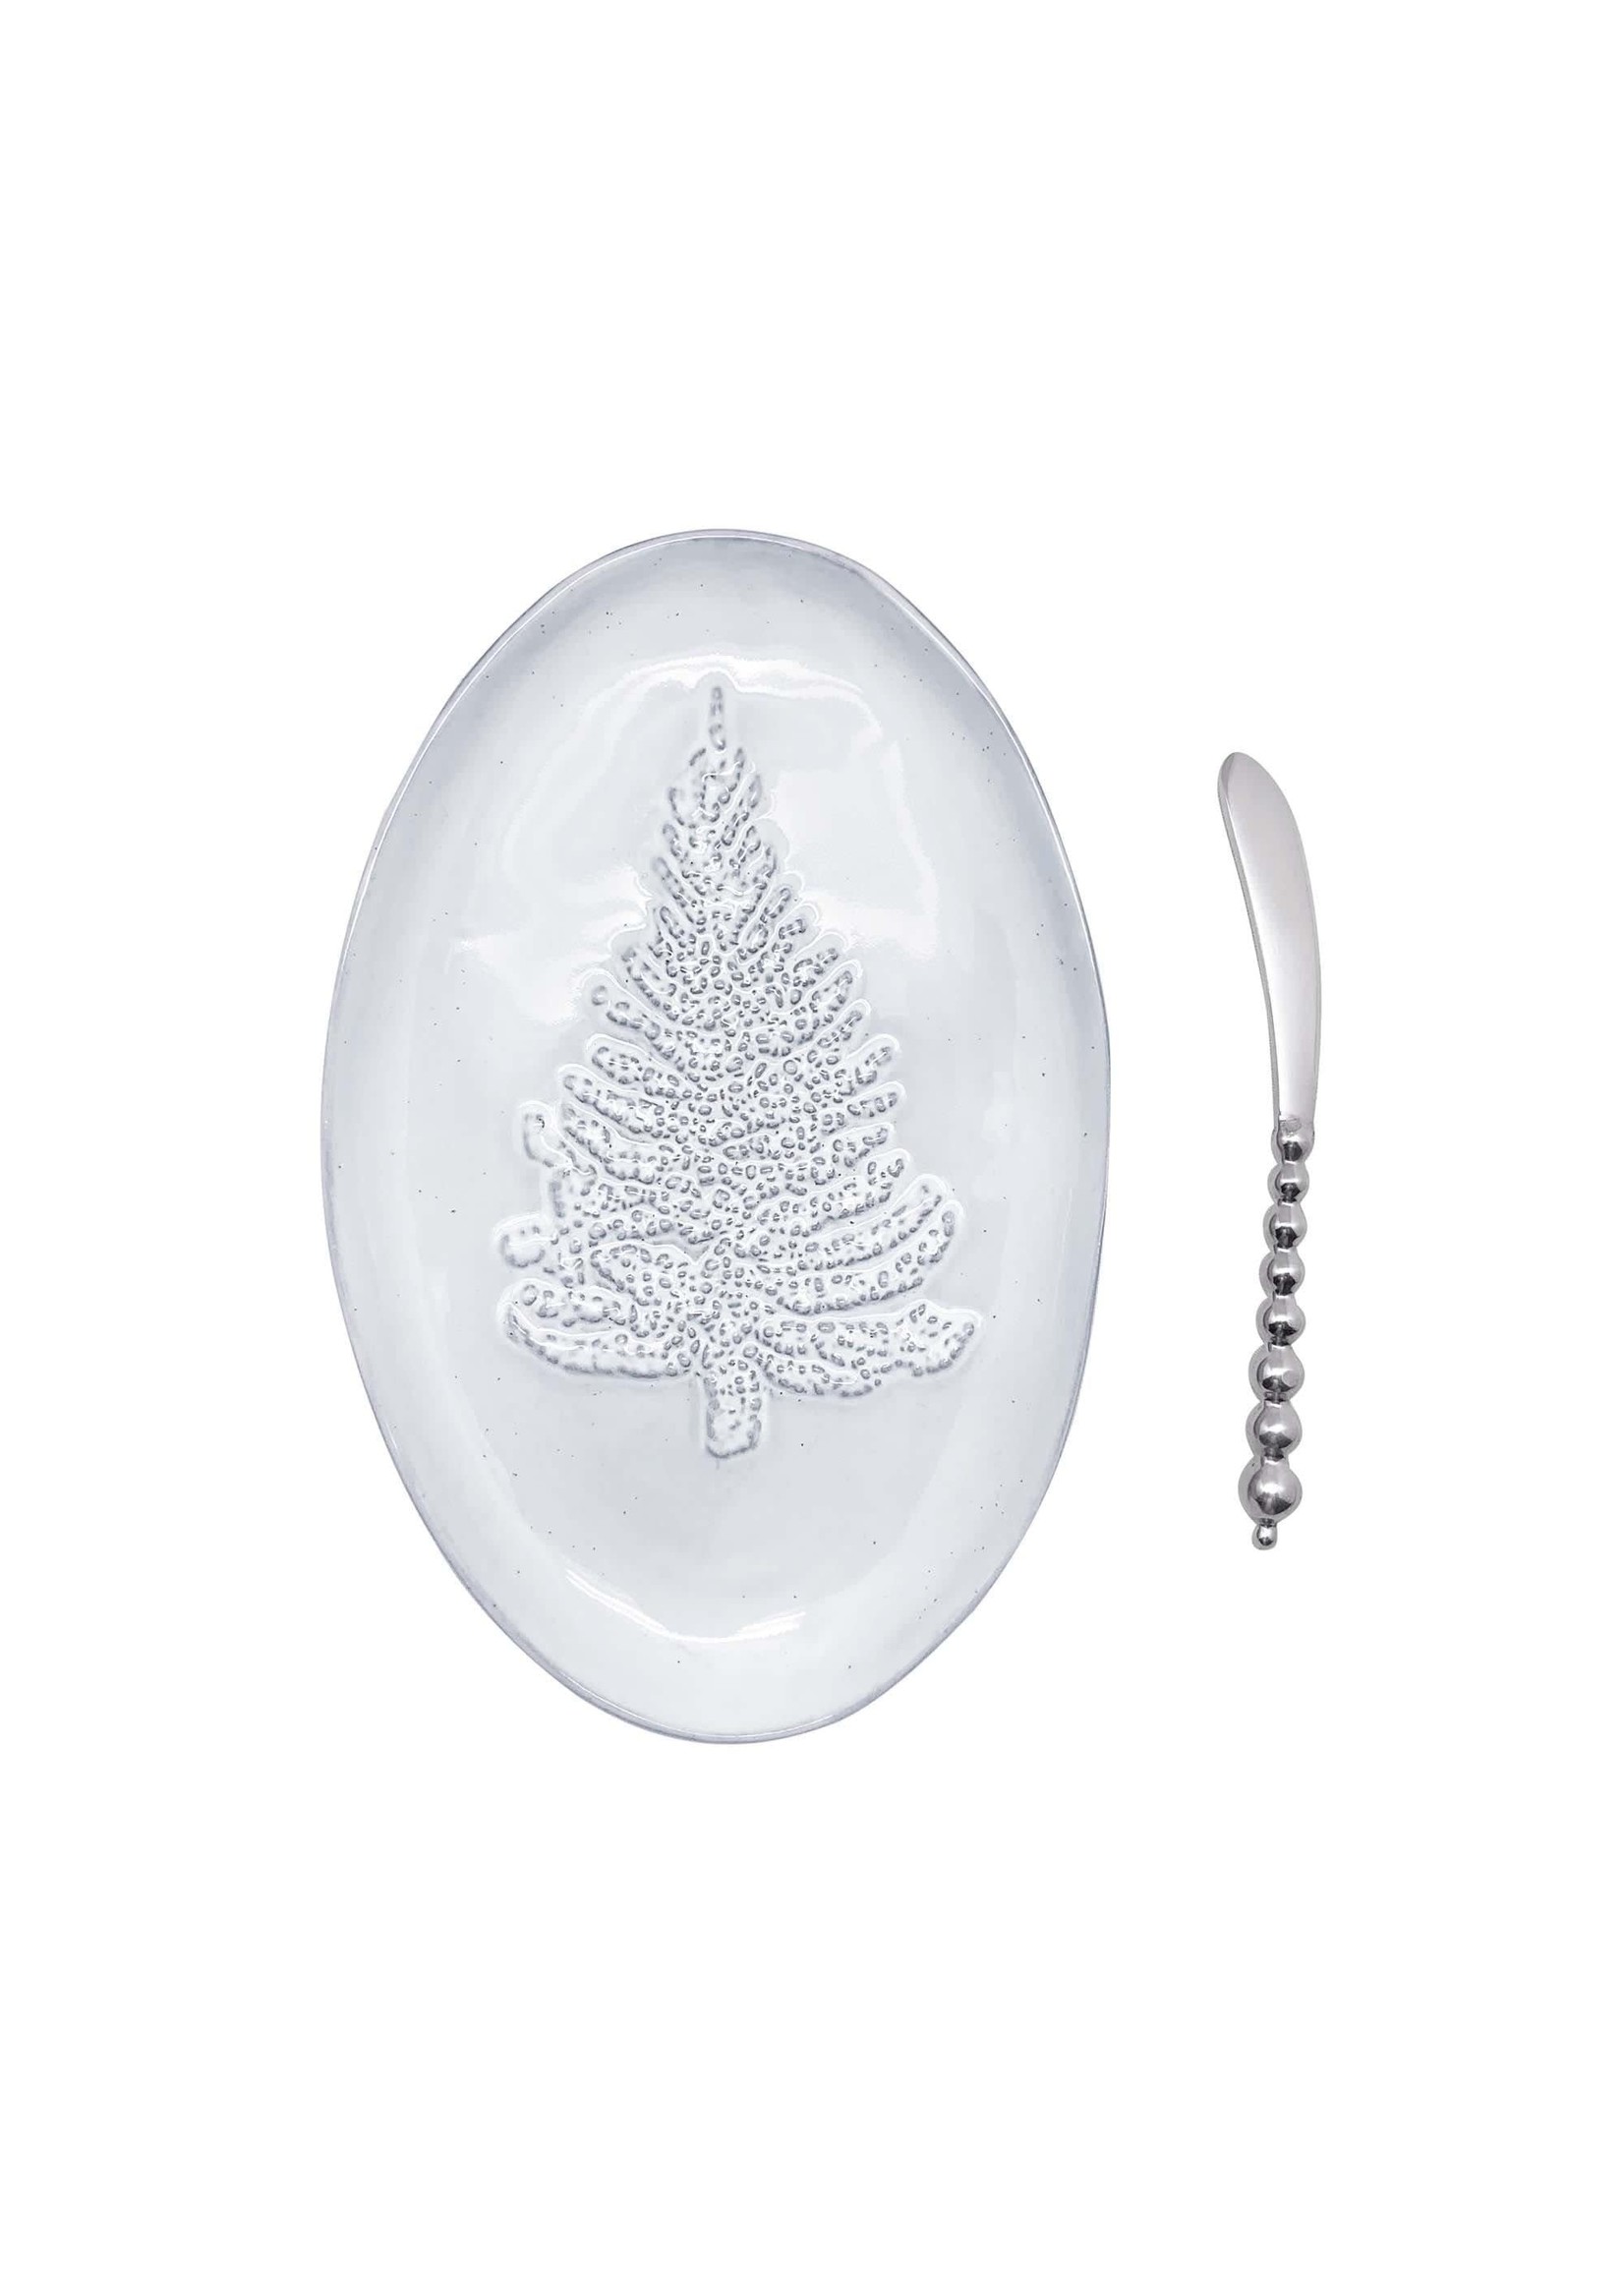 Ceramic Oval Tree Plate & Spreader